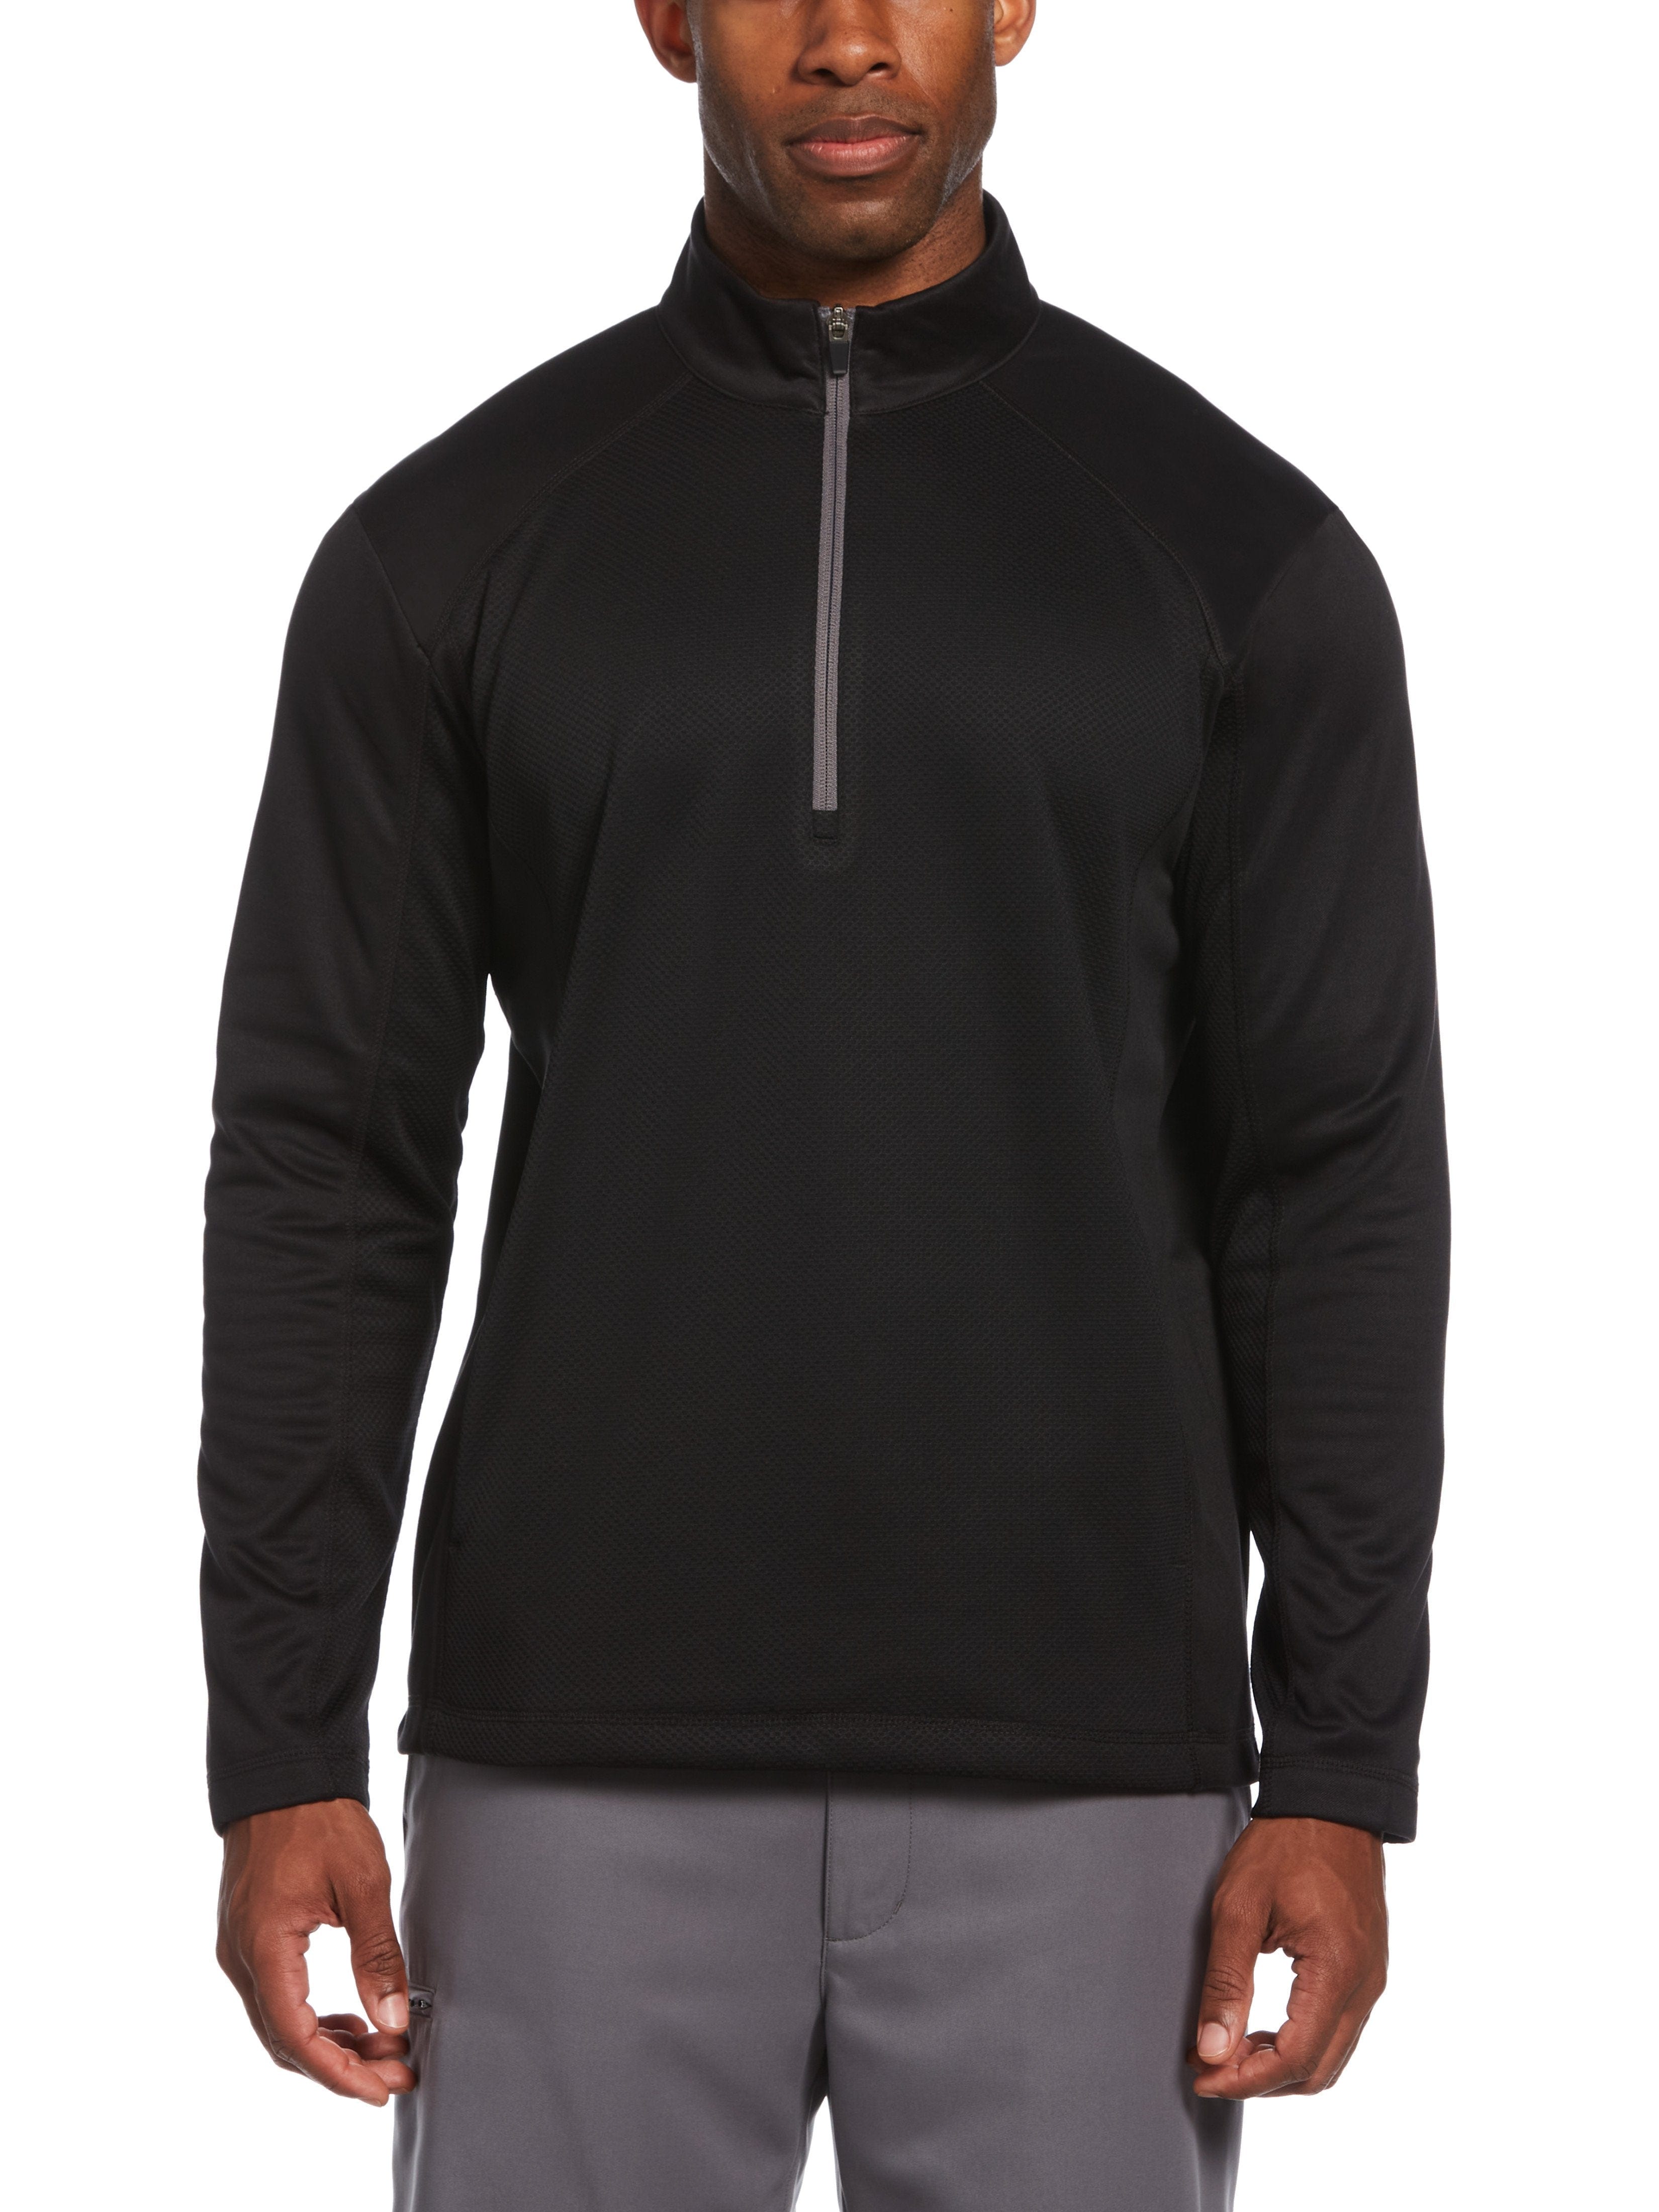 PGA TOUR Apparel Mens Mixed Texture Fleece 1/4 Zip Golf Jacket Top, Size Medium, Black, 100% Polyester | Golf Apparel Shop